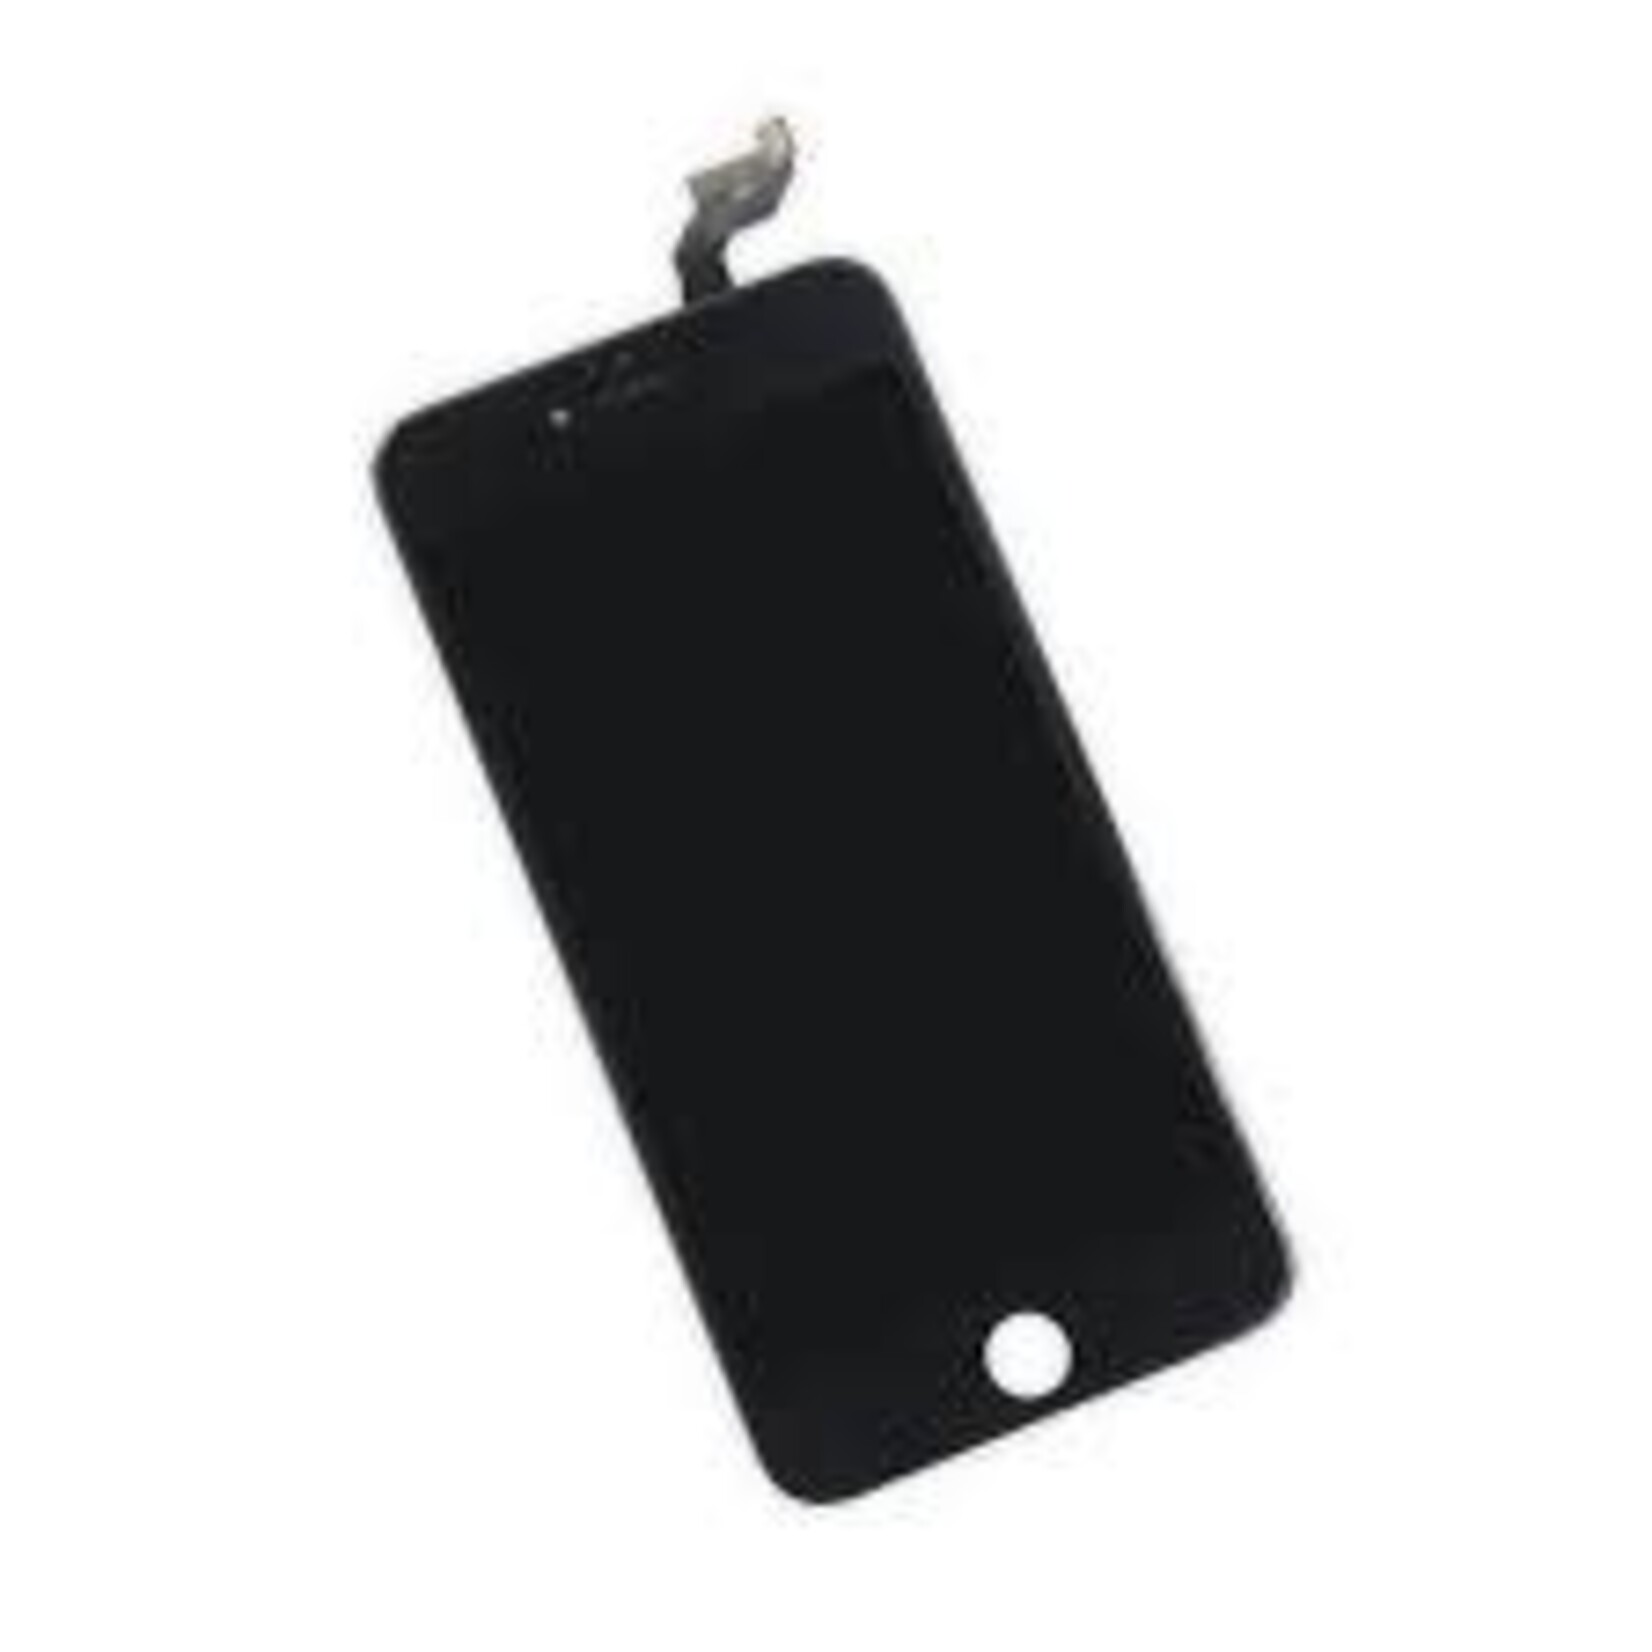 Apple USAGÉ / USED LCD DIGITIZER ASSEMBLY NOIR BLACK IPHONE 6S